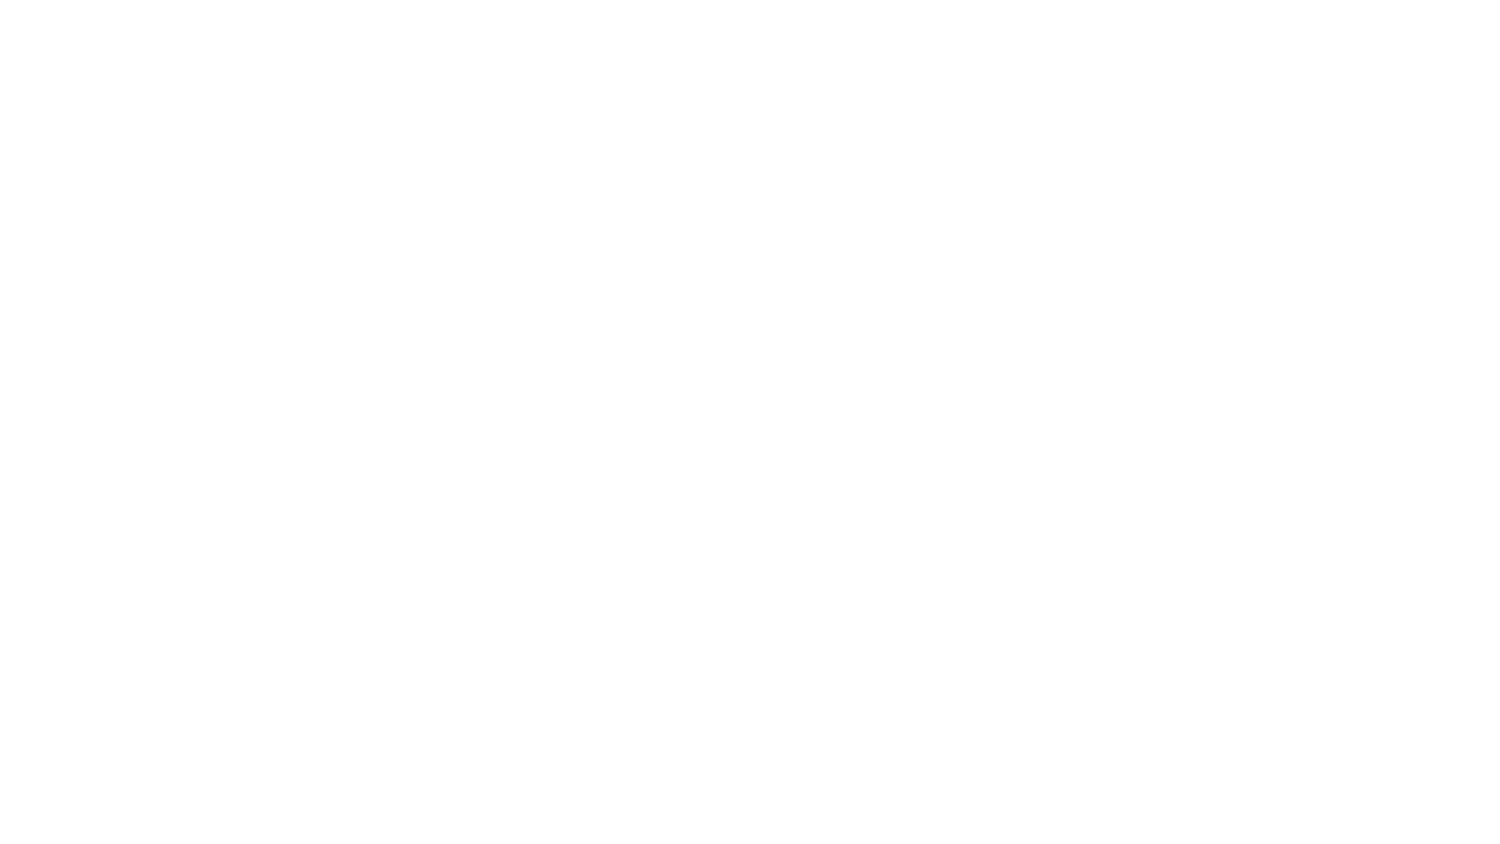 Gingersnap Digital